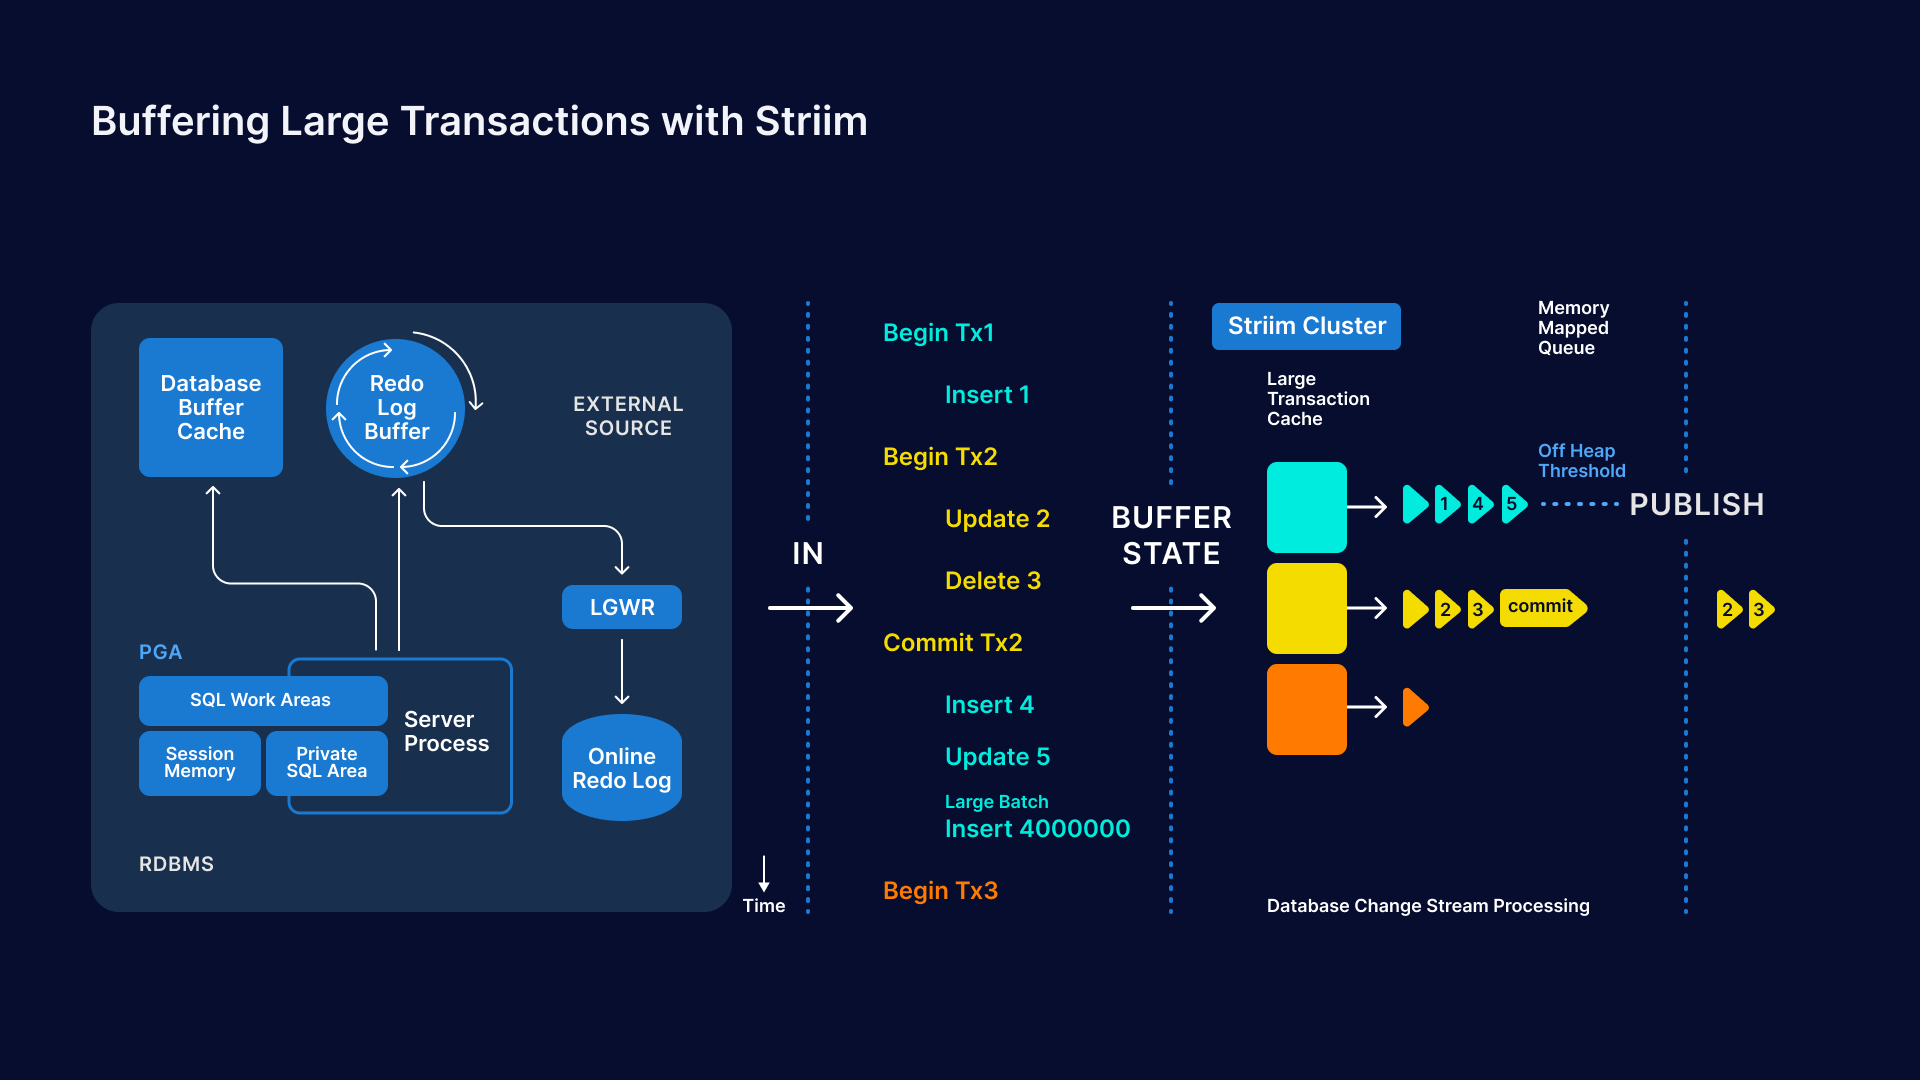 Striim buffers large transactions